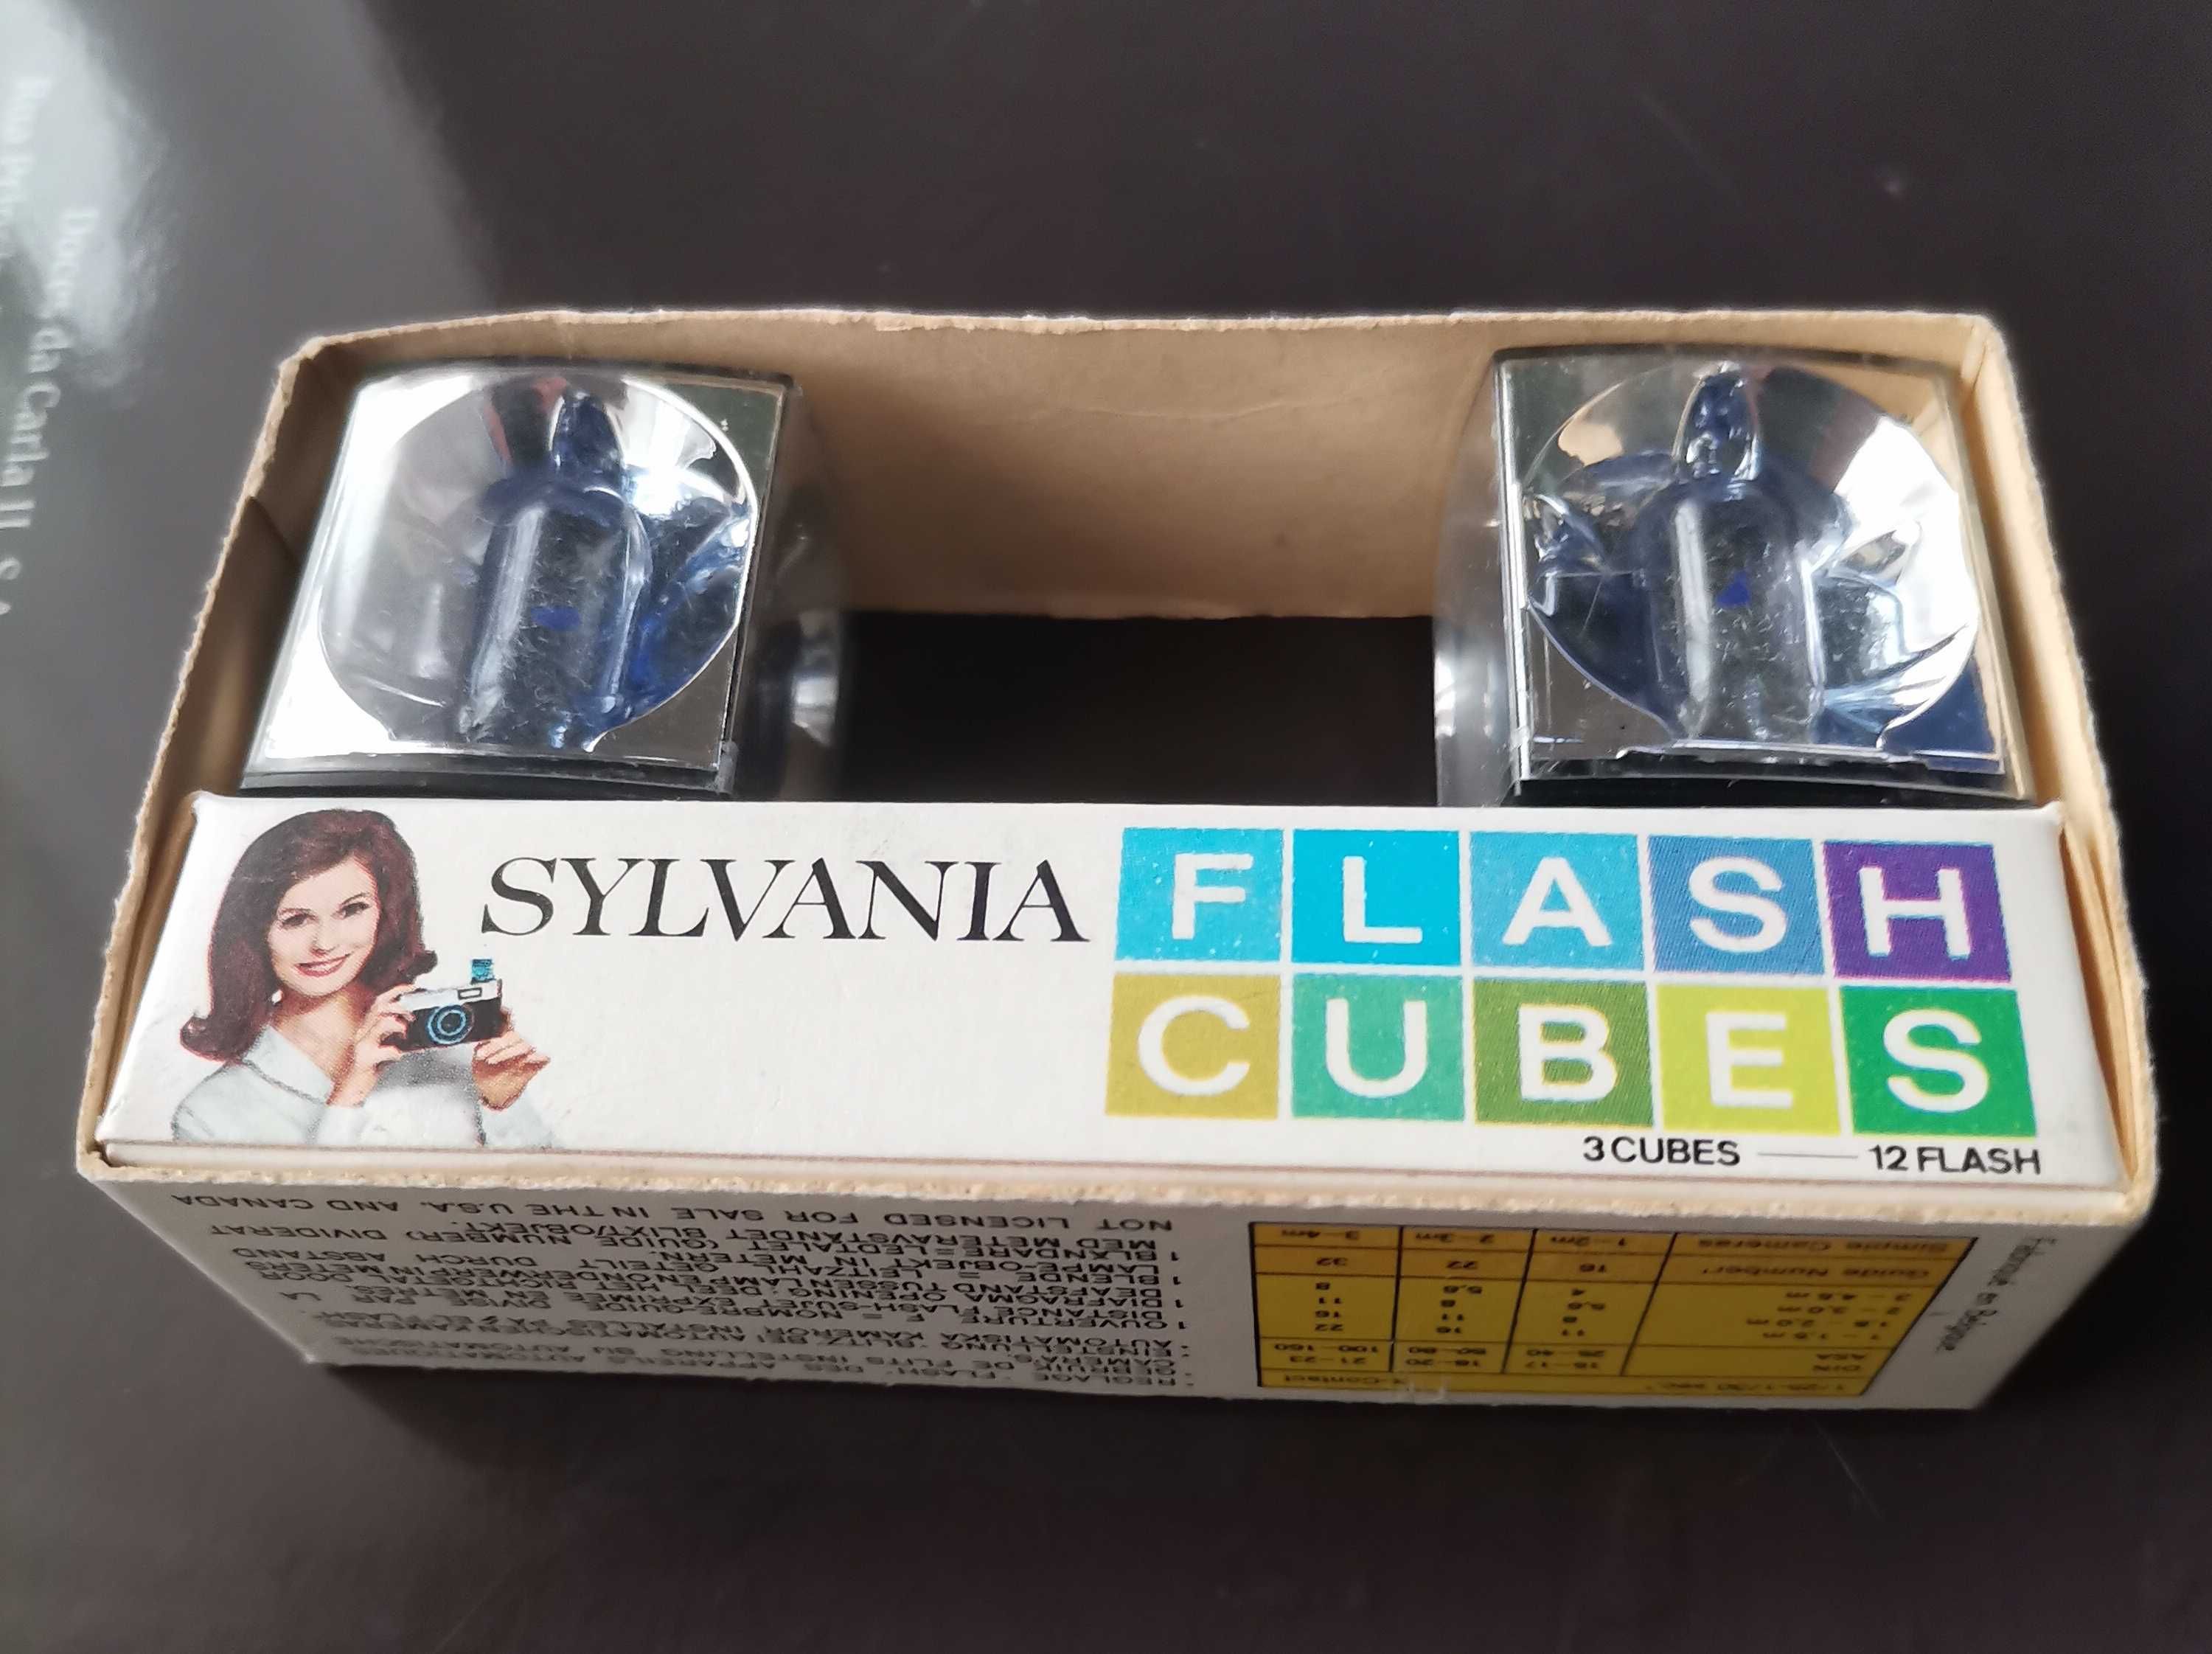 Flash cubes sylvania